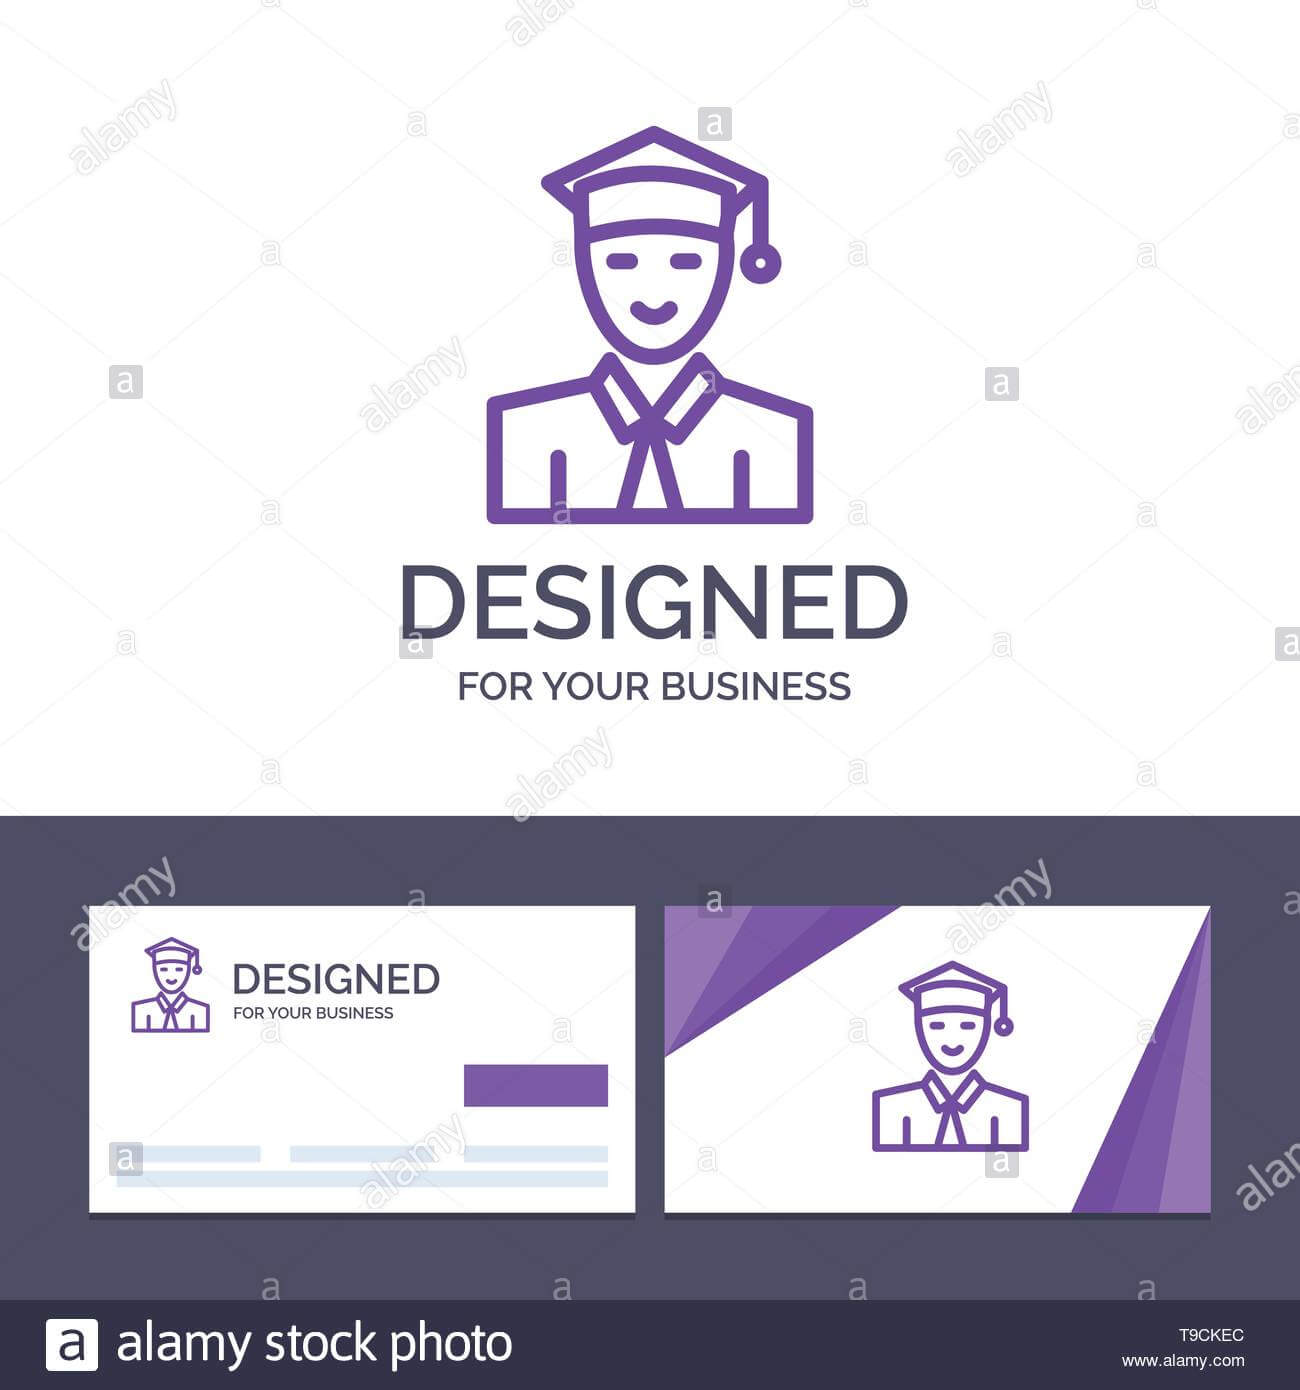 Creative Business Card And Logo Template Student, Education Regarding Graduate Student Business Cards Template